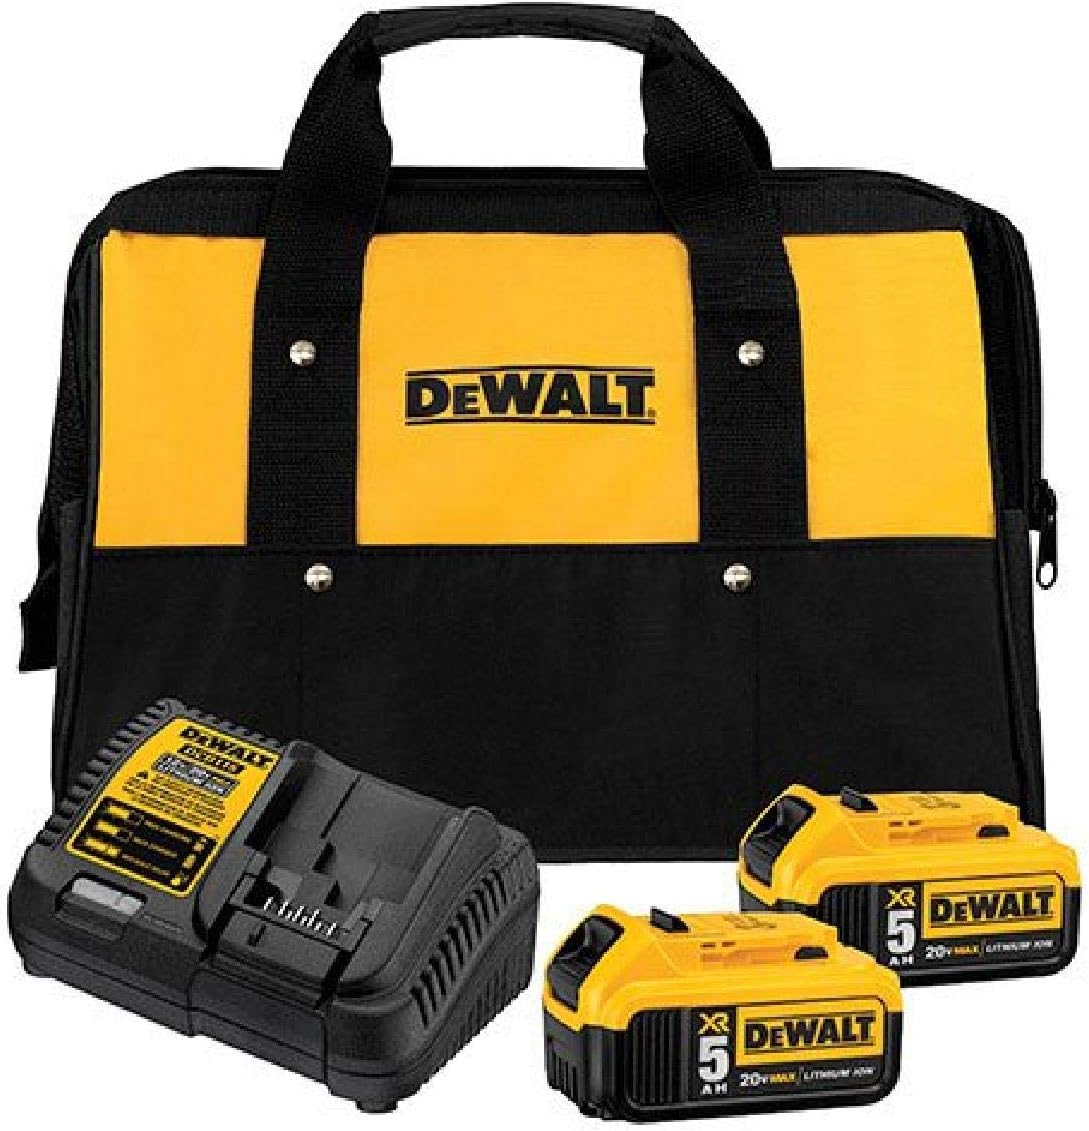 DEWALT 20V MAX Angle Grinder Tool (DCG413B) and Battery Charging Kit (DCB205-2CK)